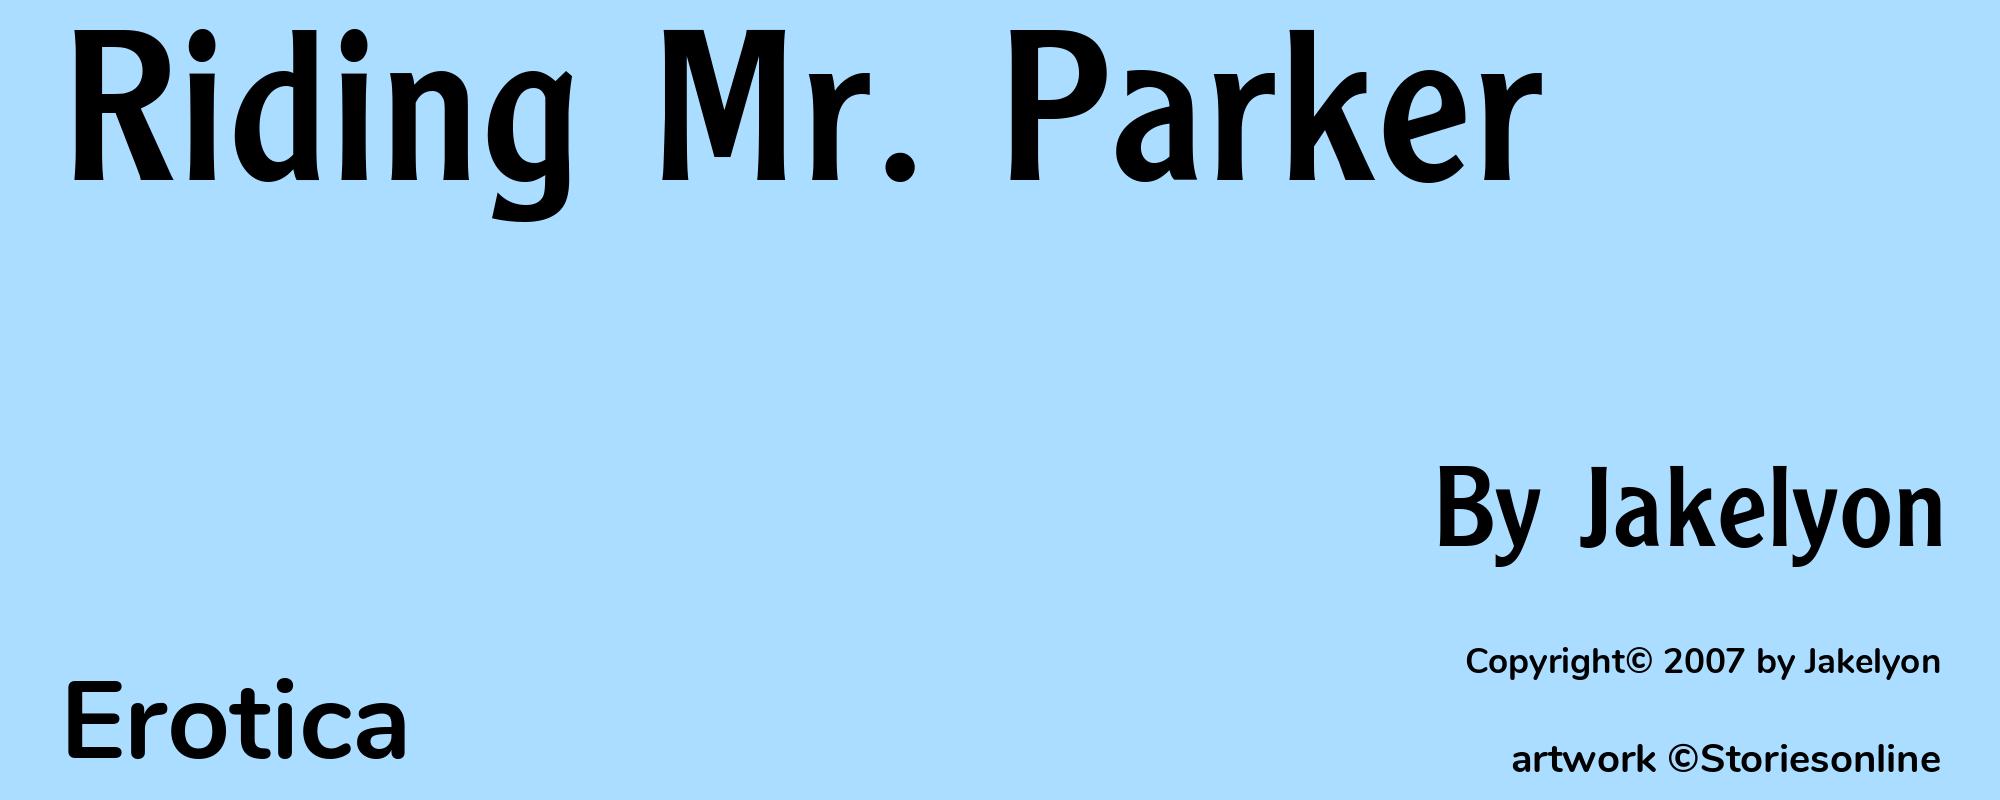 Riding Mr. Parker - Cover